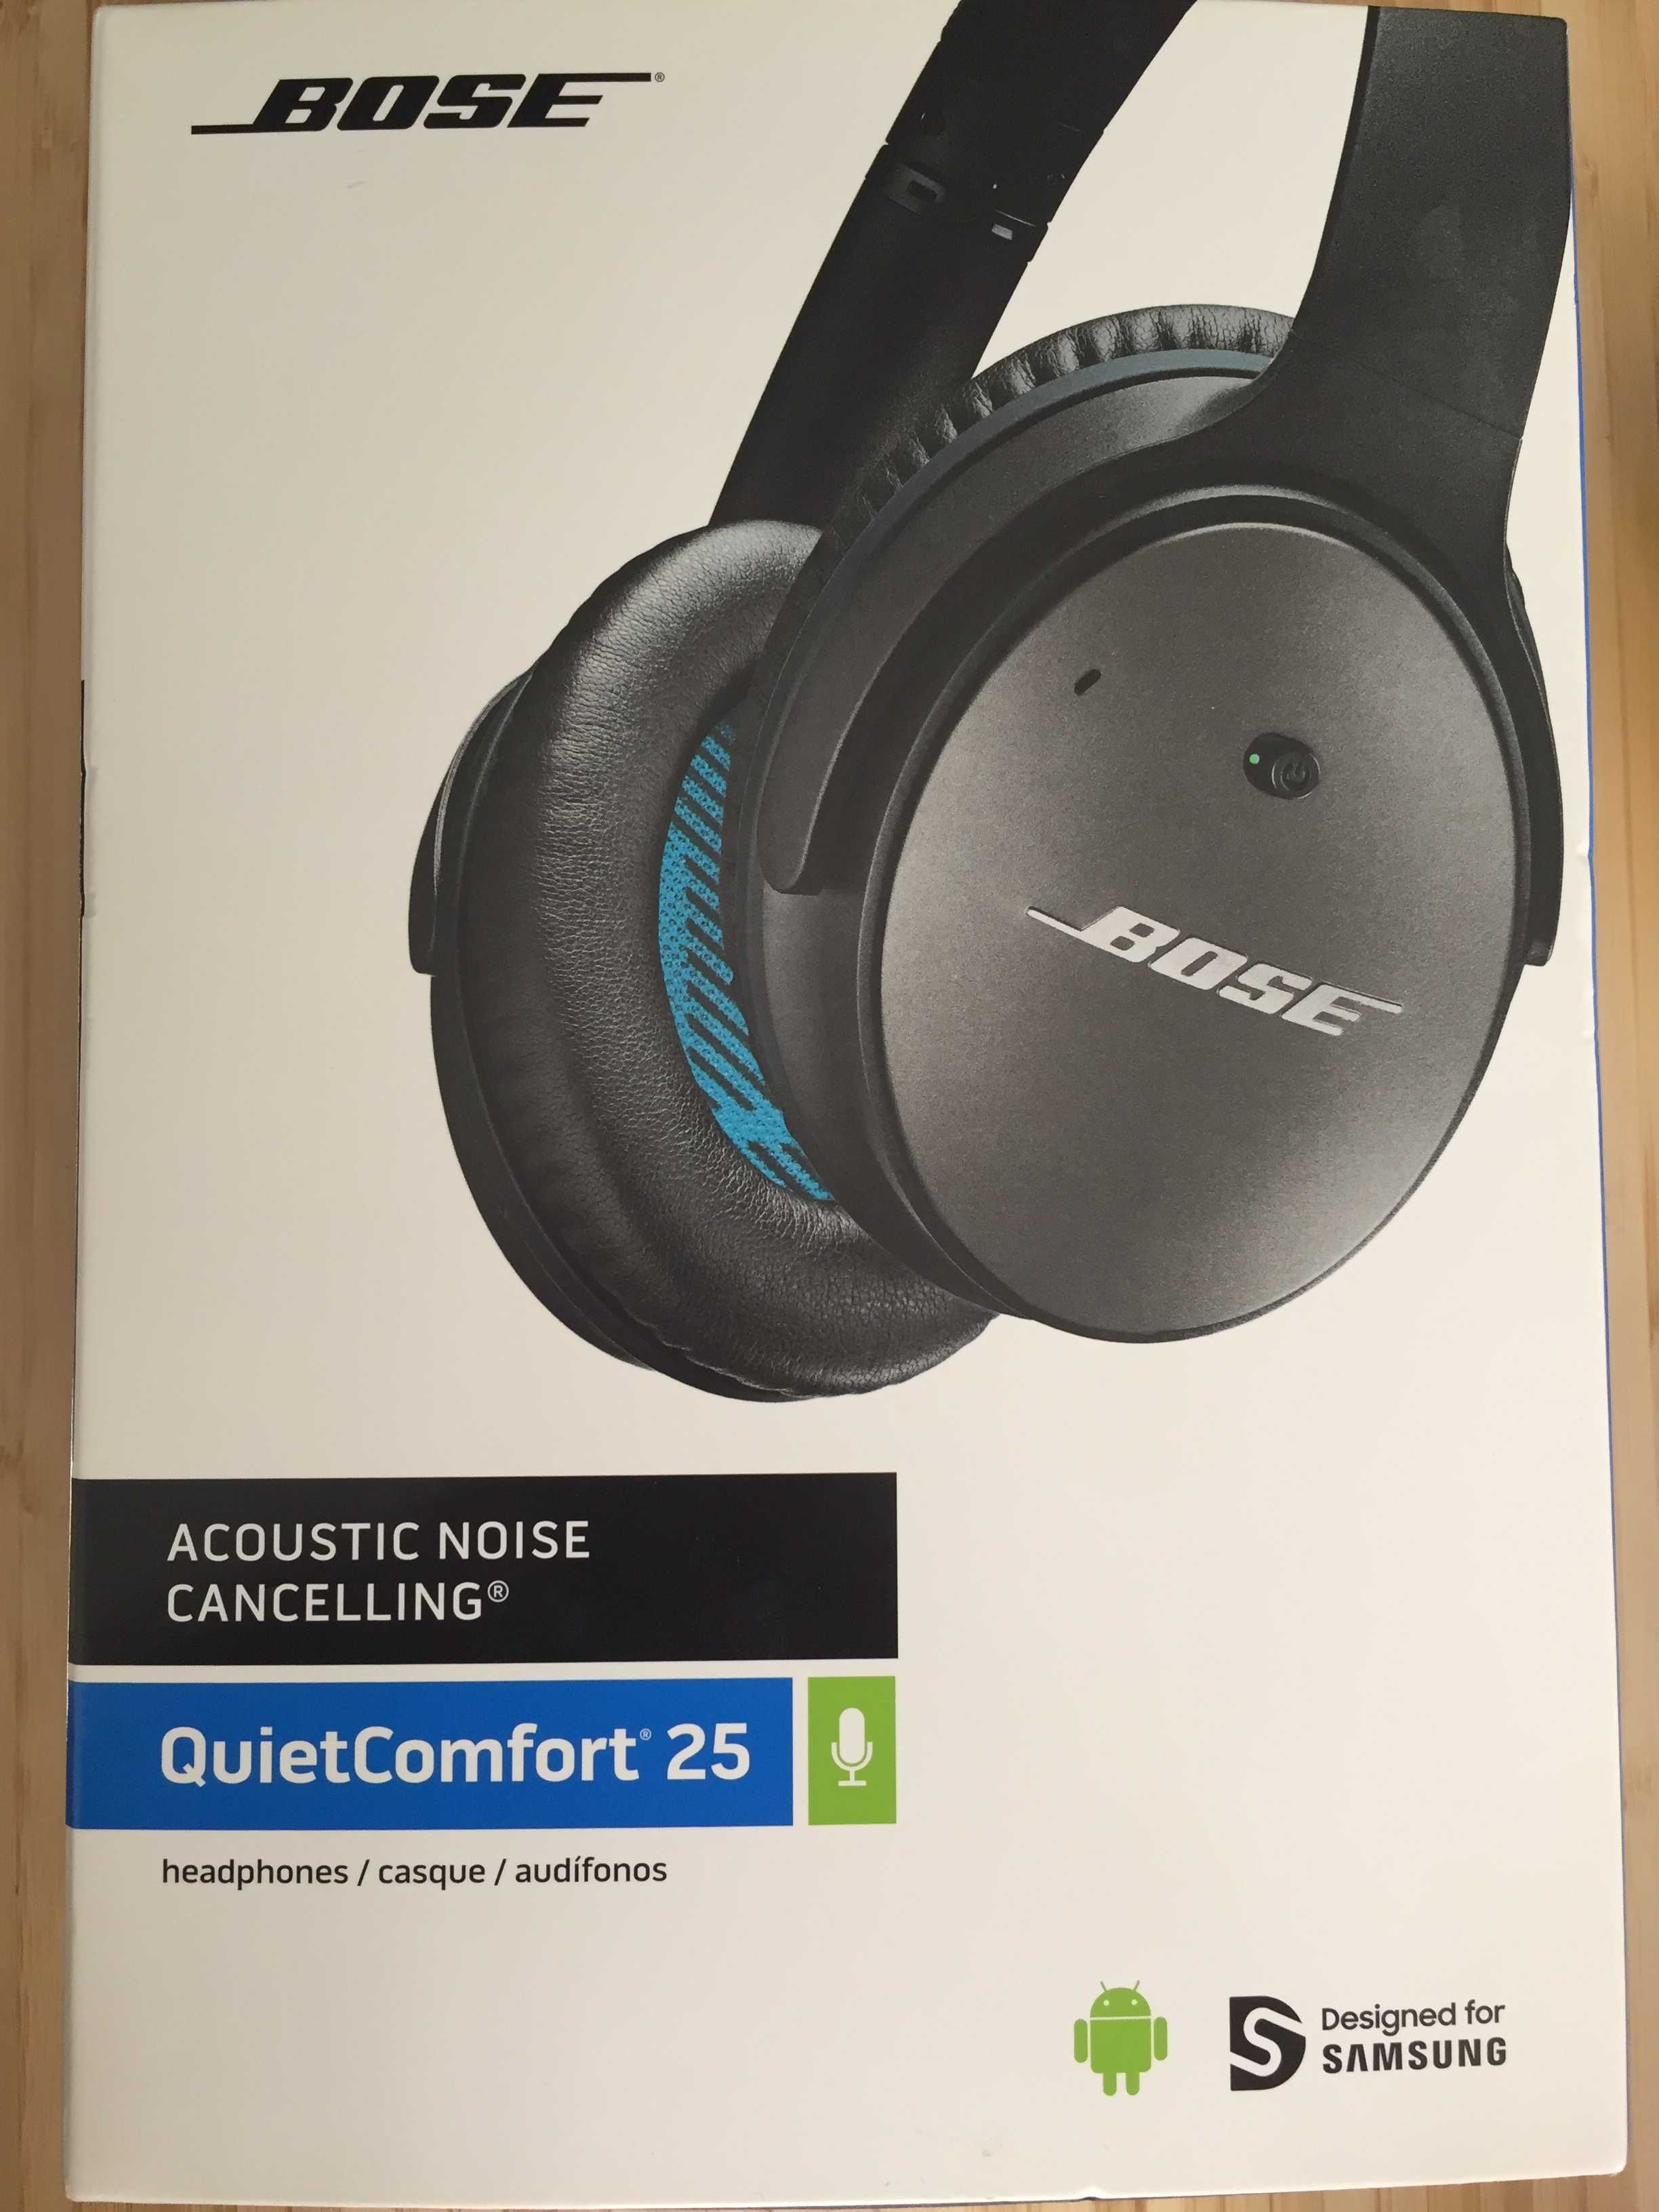 Auscultadores / Headphones Bose QuietComfort 25